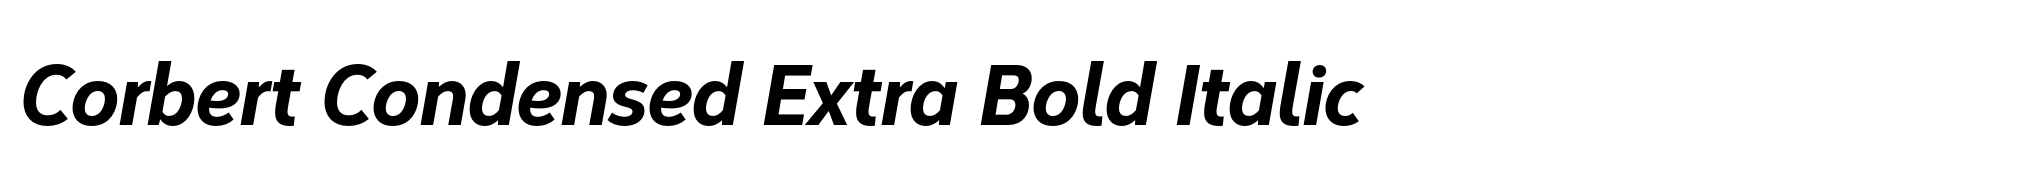 Corbert Condensed Extra Bold Italic image